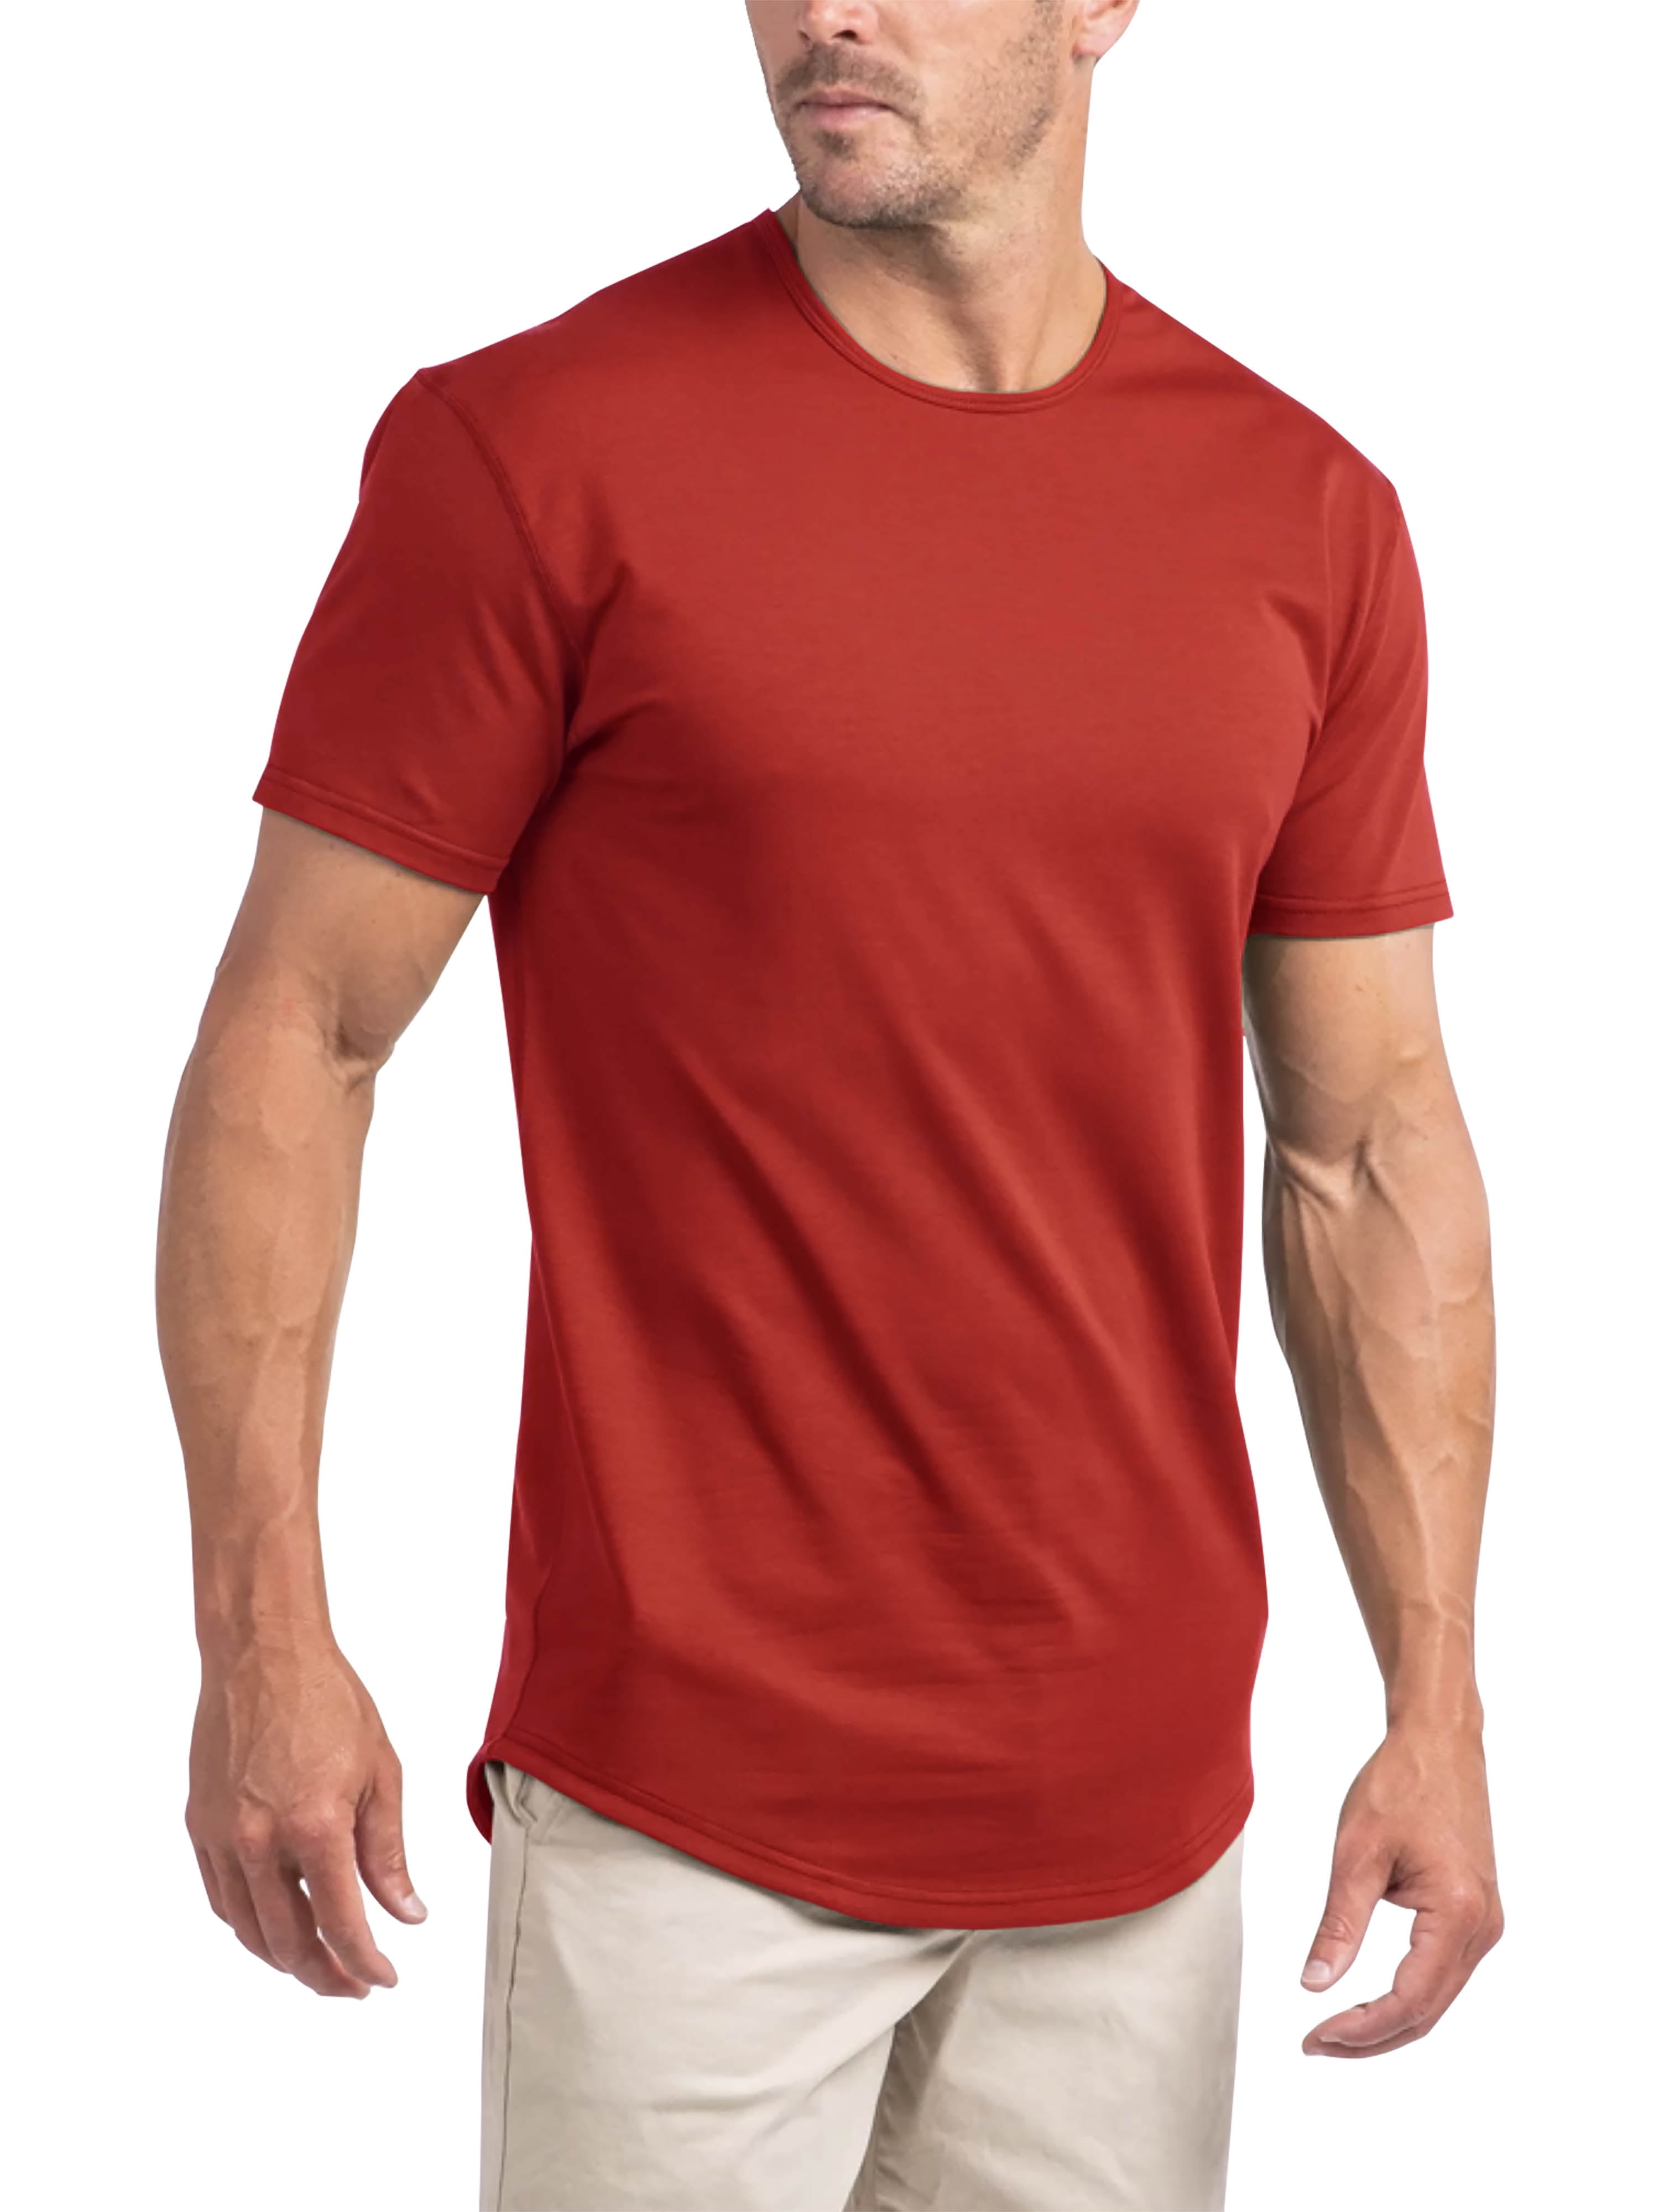 Details about   Men's Shirt Fleece Lining Long Sleeve Cotton Tops Single Blouses Vintage Style D 